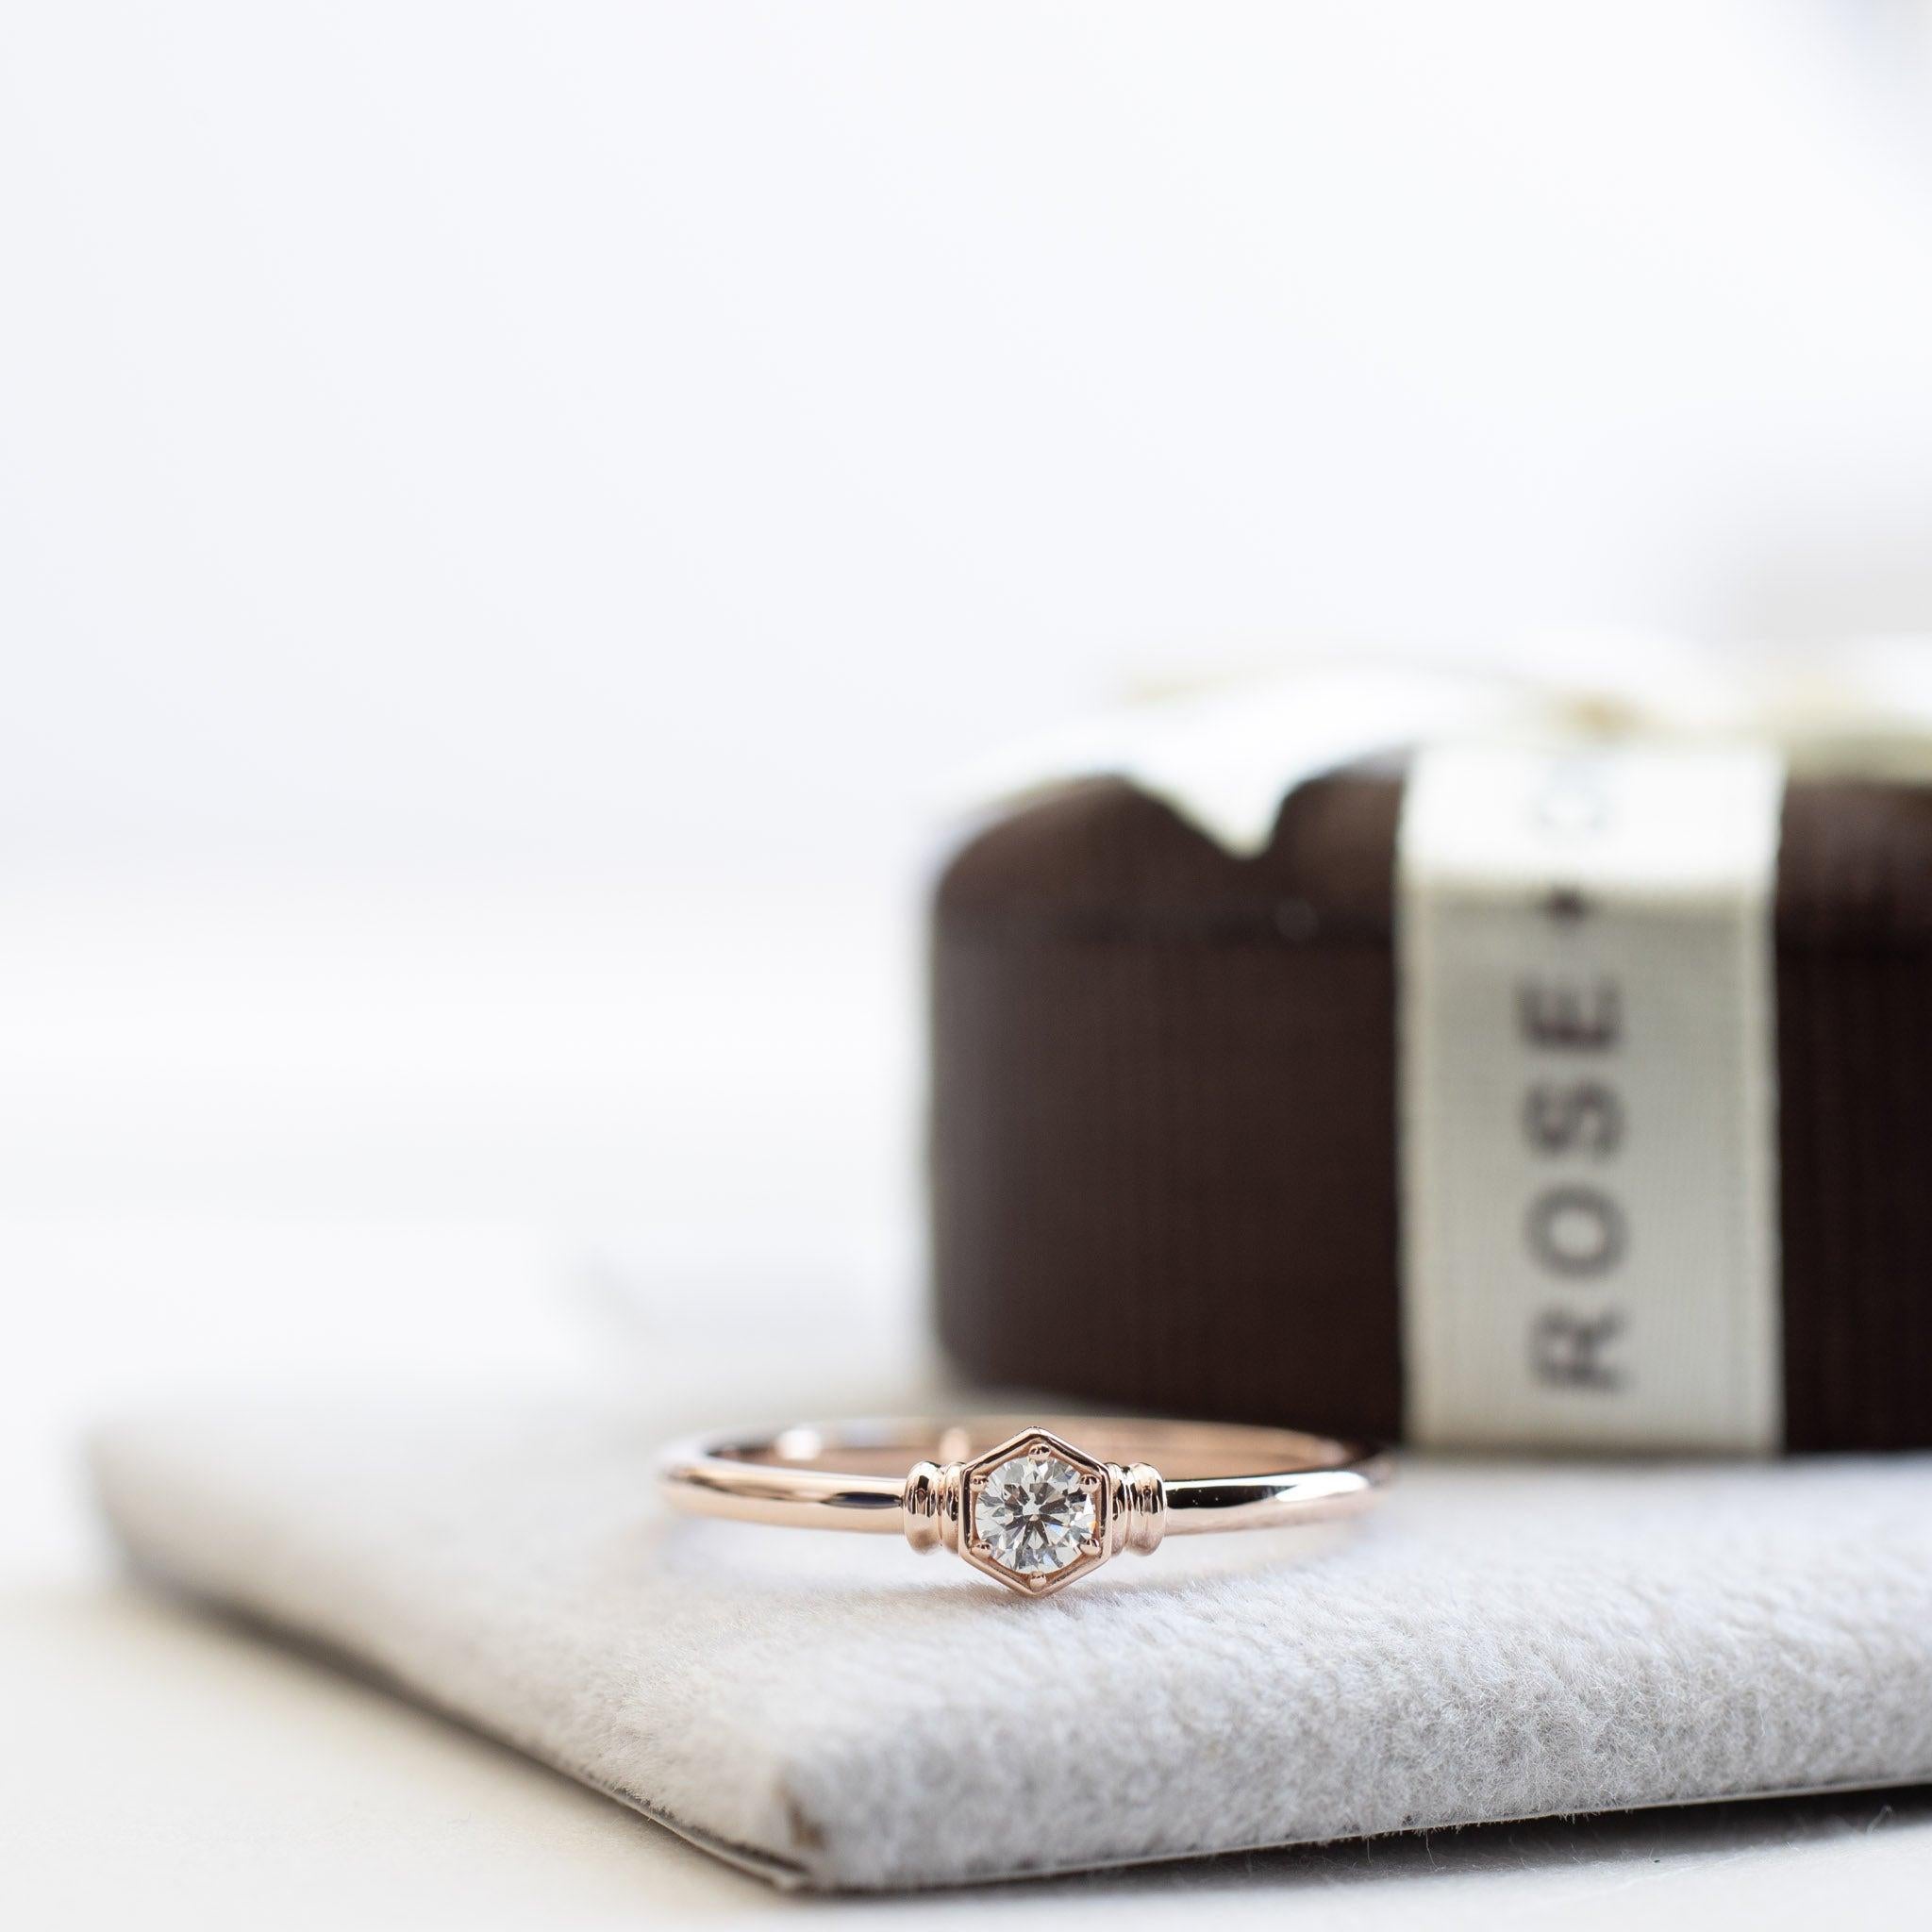 For Sale:  Hexagon Ring with 0.1 Carat Diamond, Honeycomb Ring, 18 Karat Rose Gold Ring 2